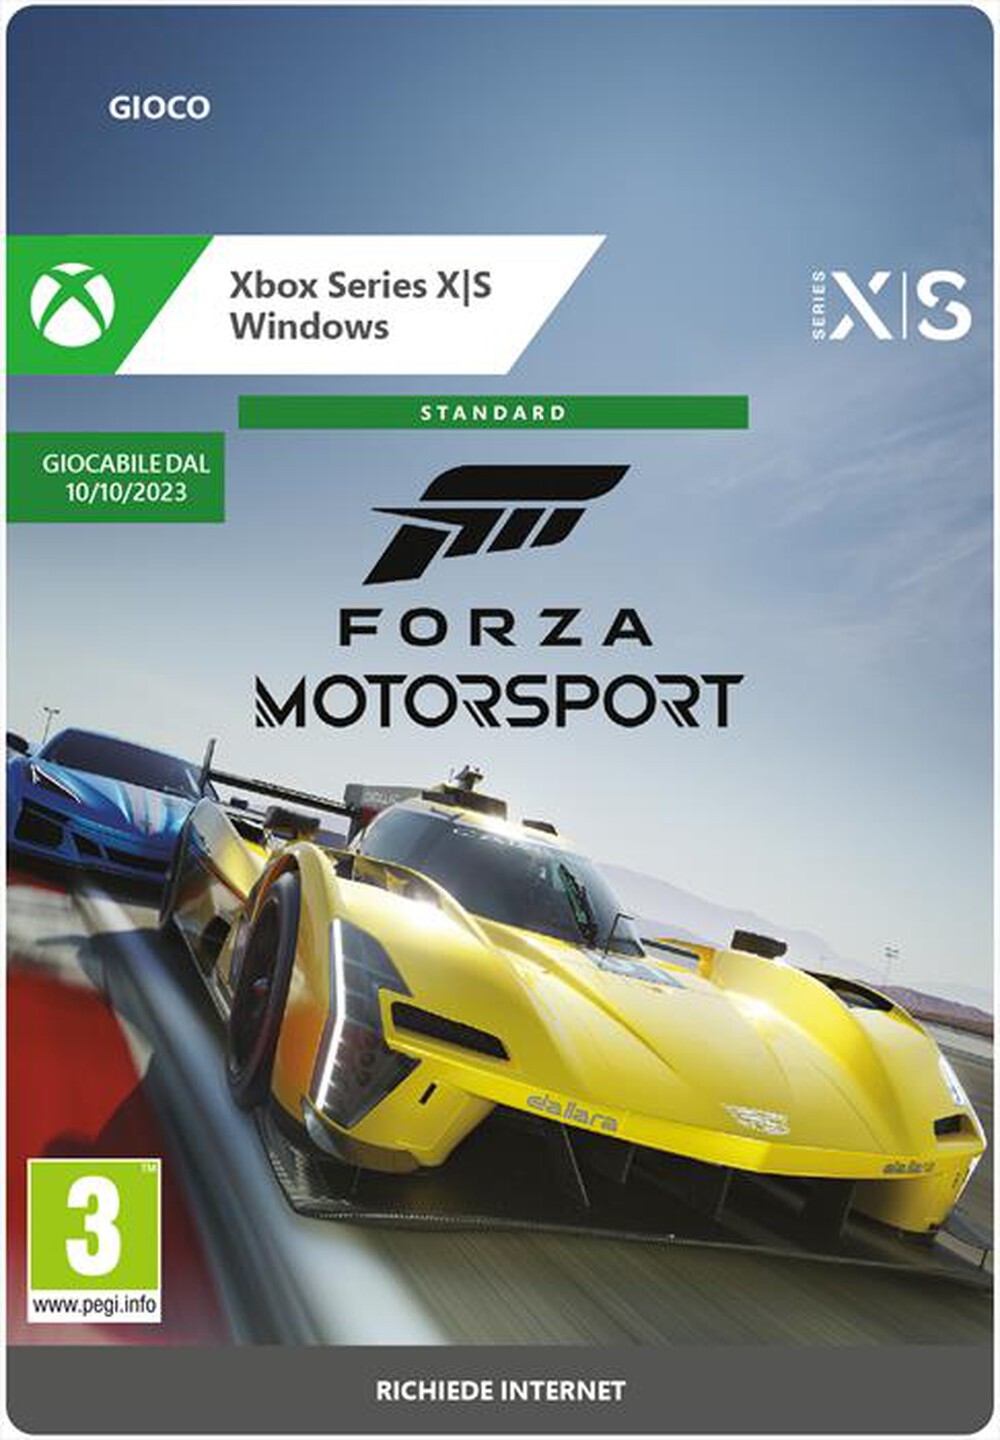 "MICROSOFT - Forza Motorsport Std Edt"